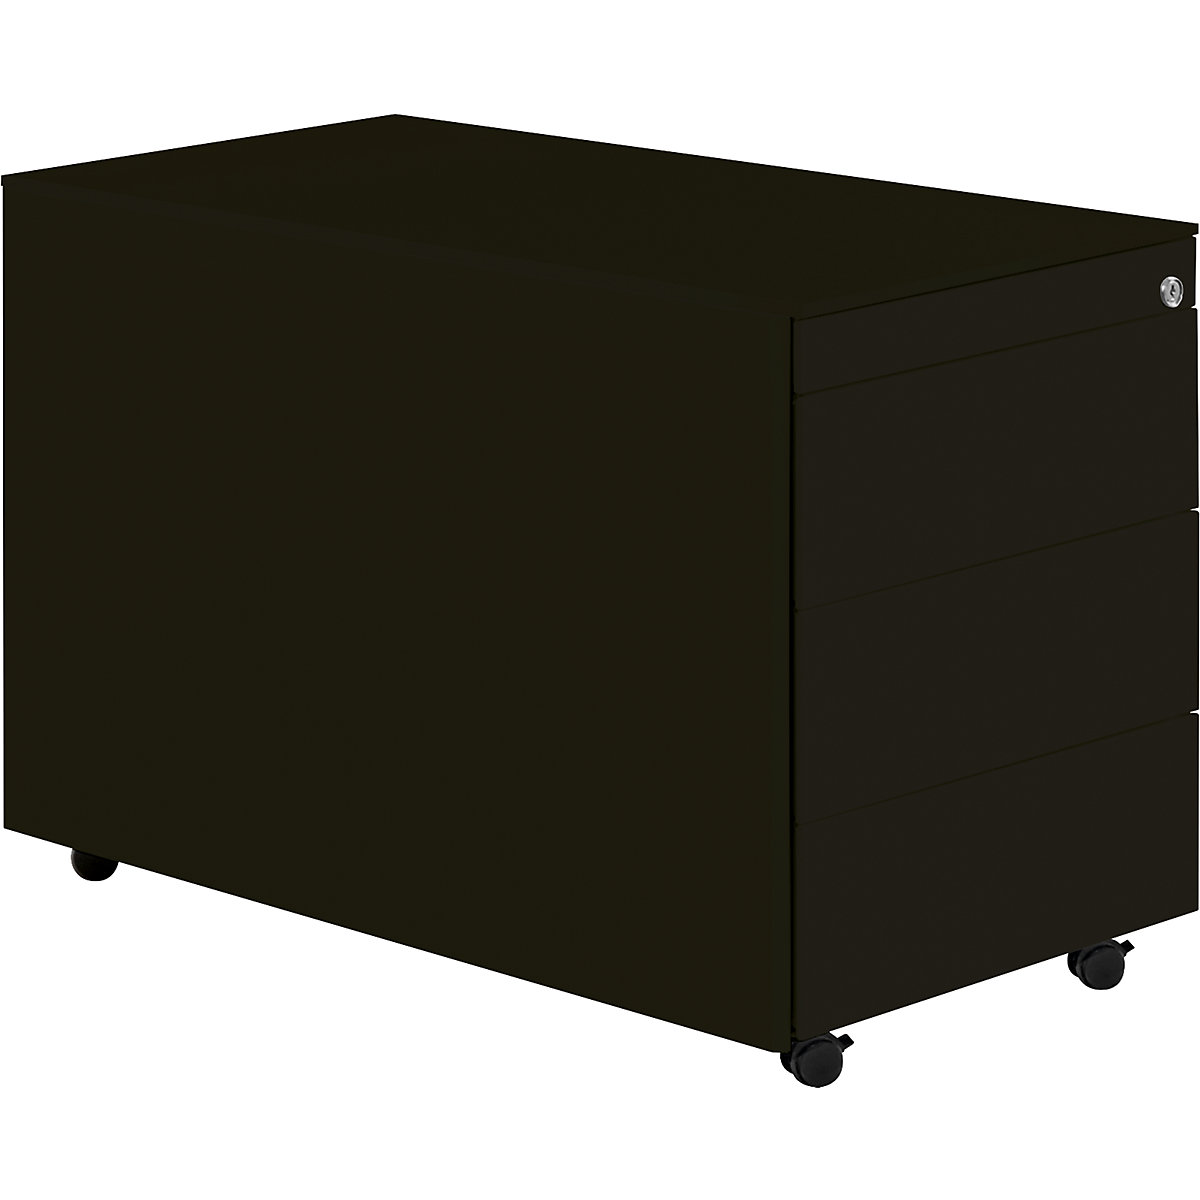 Casetieră cu sertare cu role – mauser, î. x ad. 570 x 800 mm, blat din oțel, 3 sertare, negru grafit / negru grafit / negru grafit-11